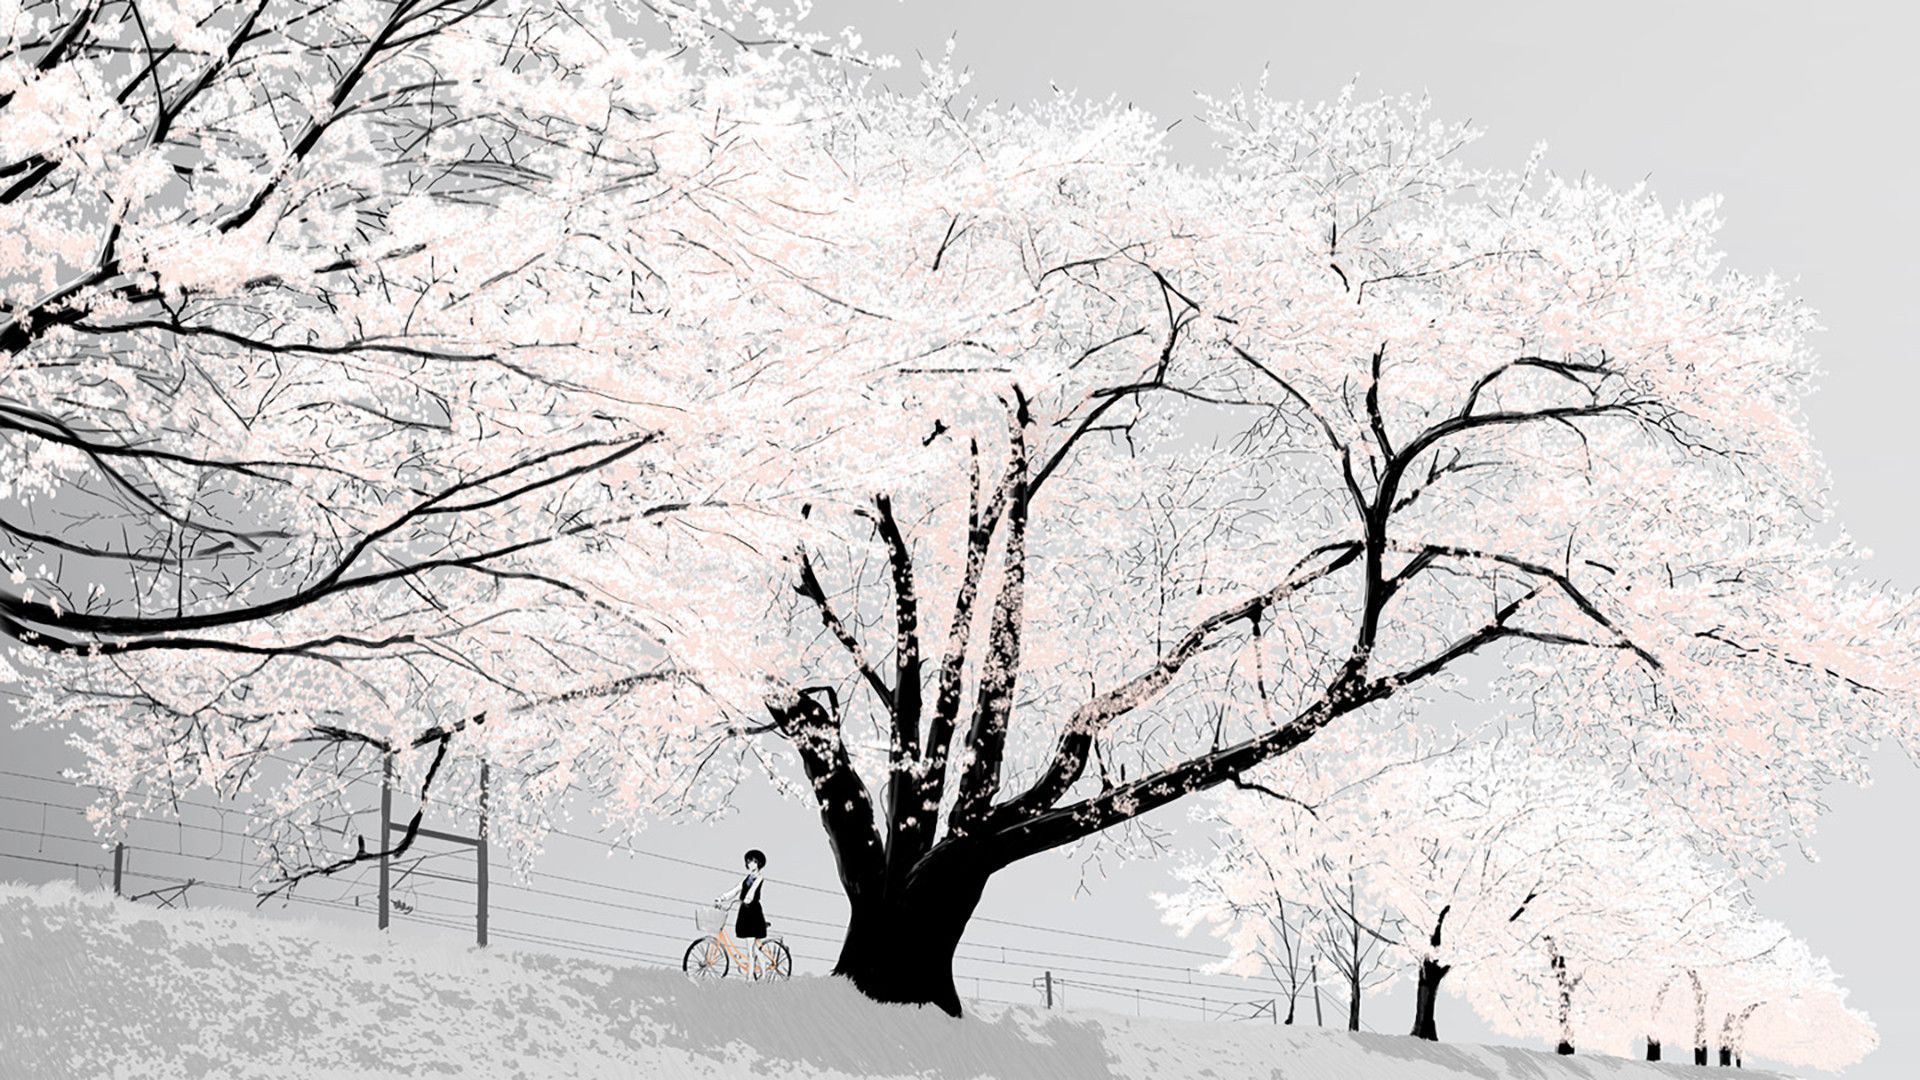 Discreet anime wallpaper. Anime scenery, Artistic wallpaper, Winter image